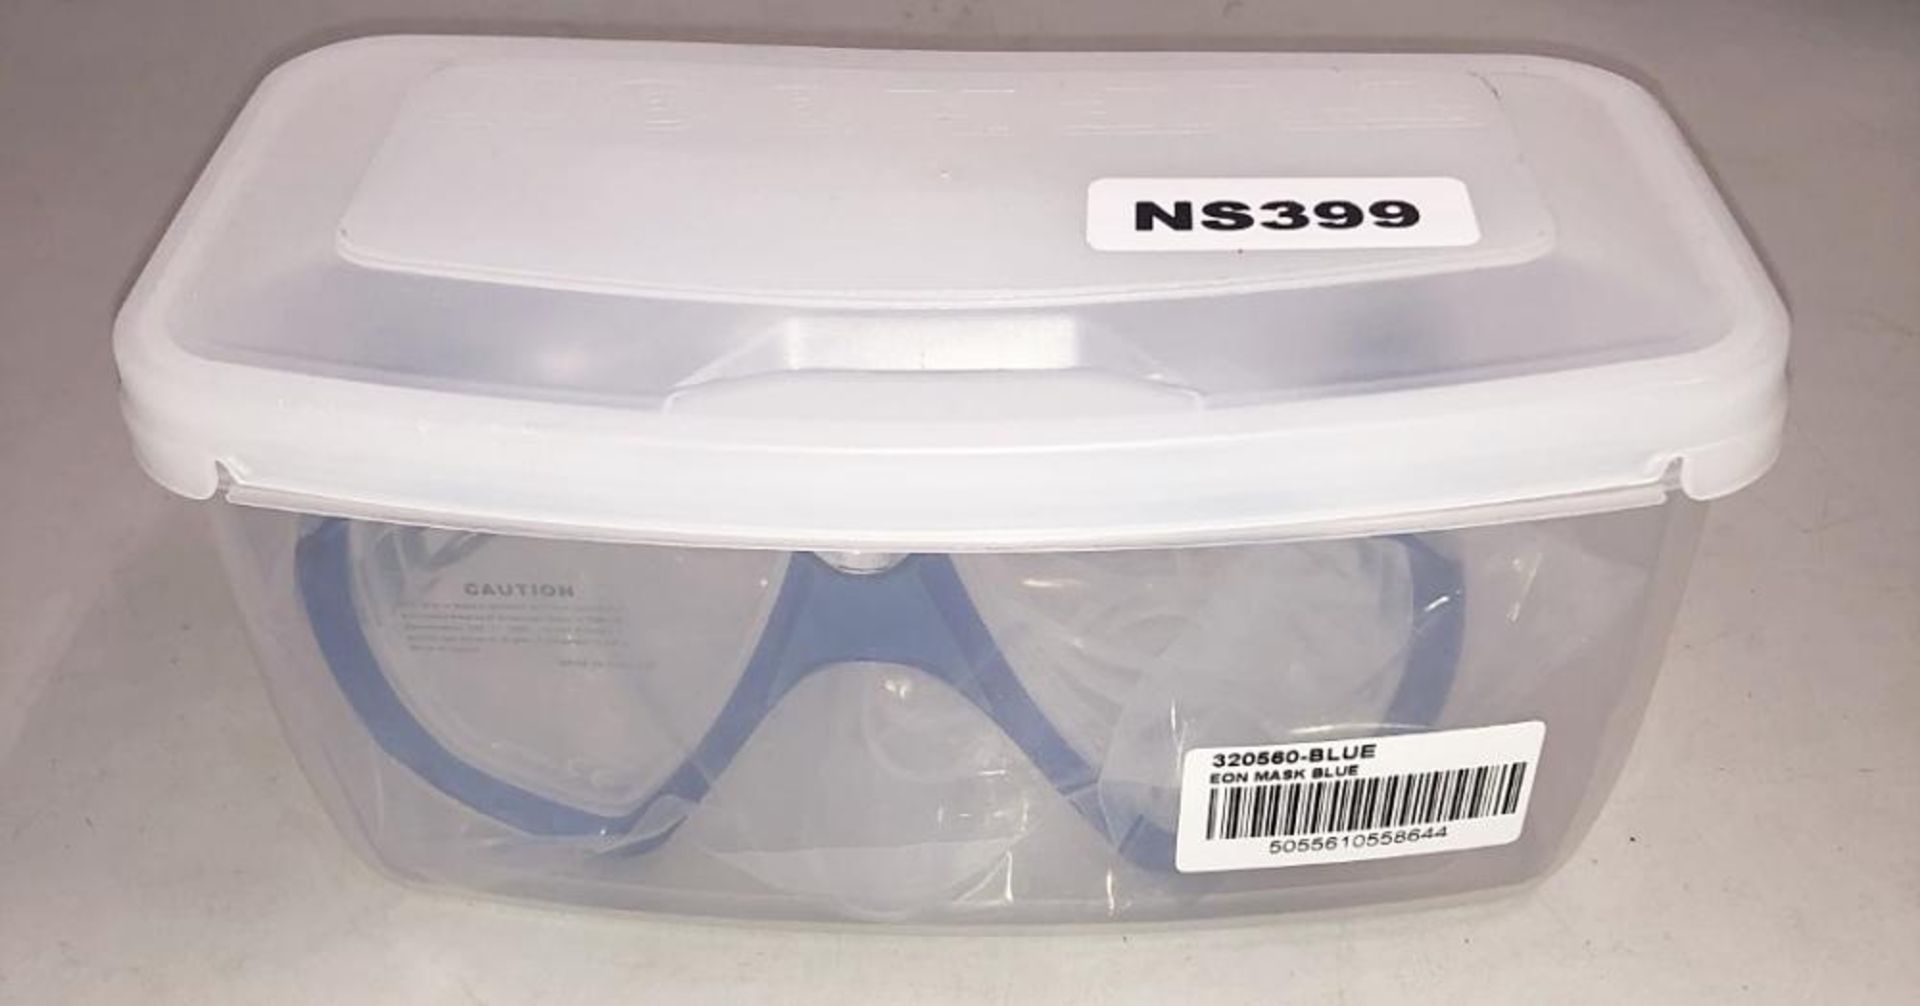 8 x New Pairs Of Branded Diving Masks - Ref: NS397, NS398, NS399, NS400, NS401, NS402, NS403, NS404 - Image 2 of 27